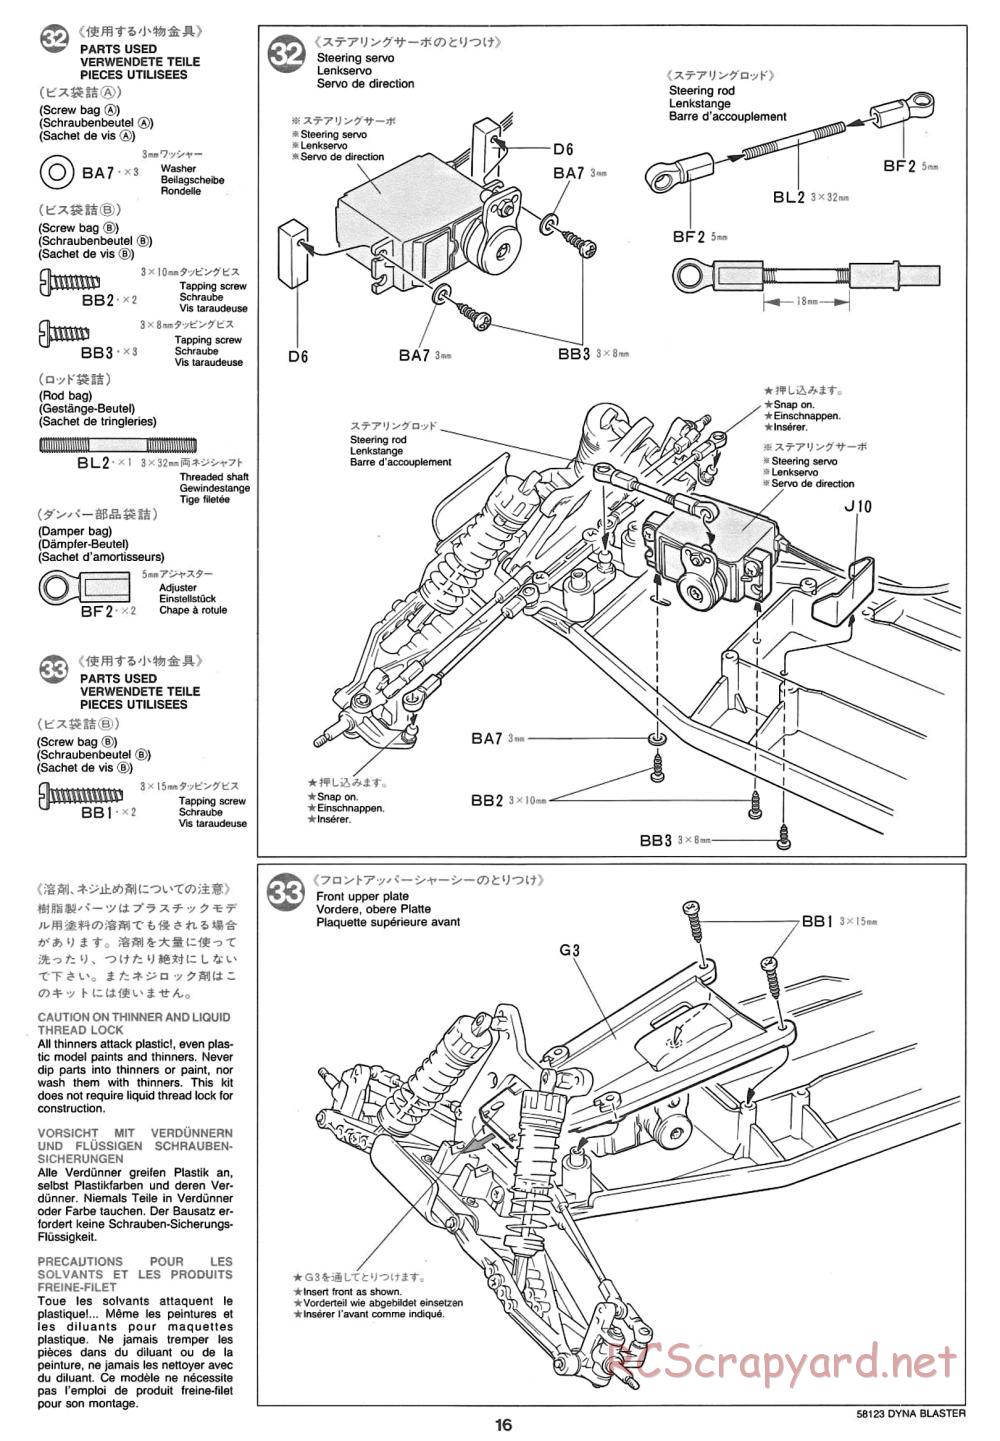 Tamiya - Dyna Blaster Chassis - Manual - Page 16